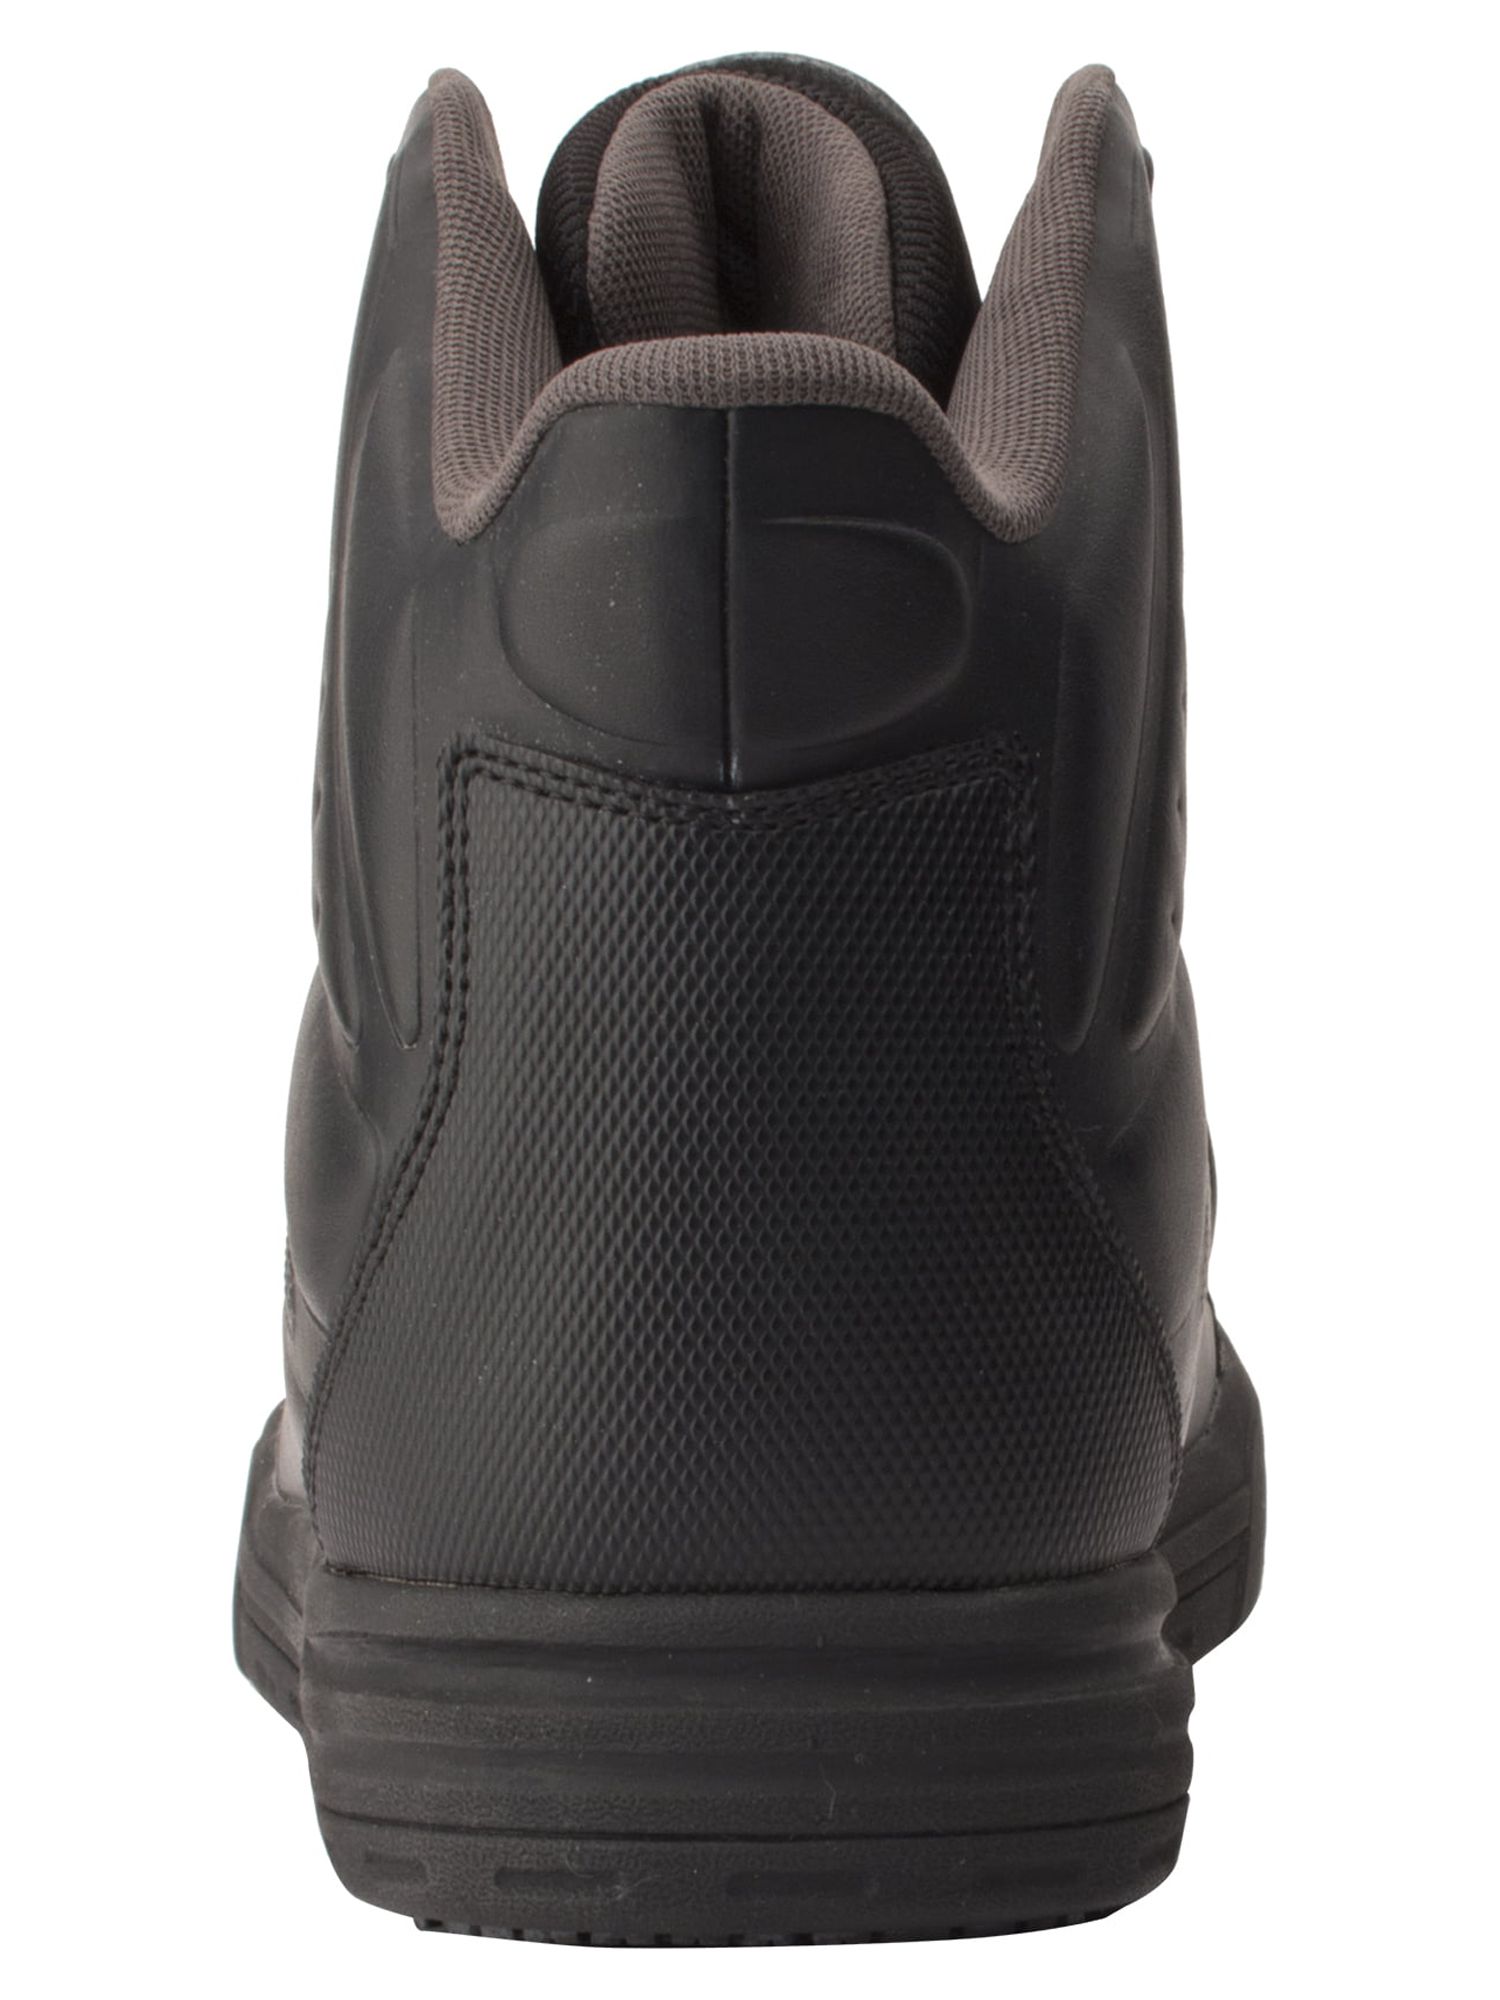 Tredsafe Men's Passit High Top Slip Resistant Shoes - image 4 of 6